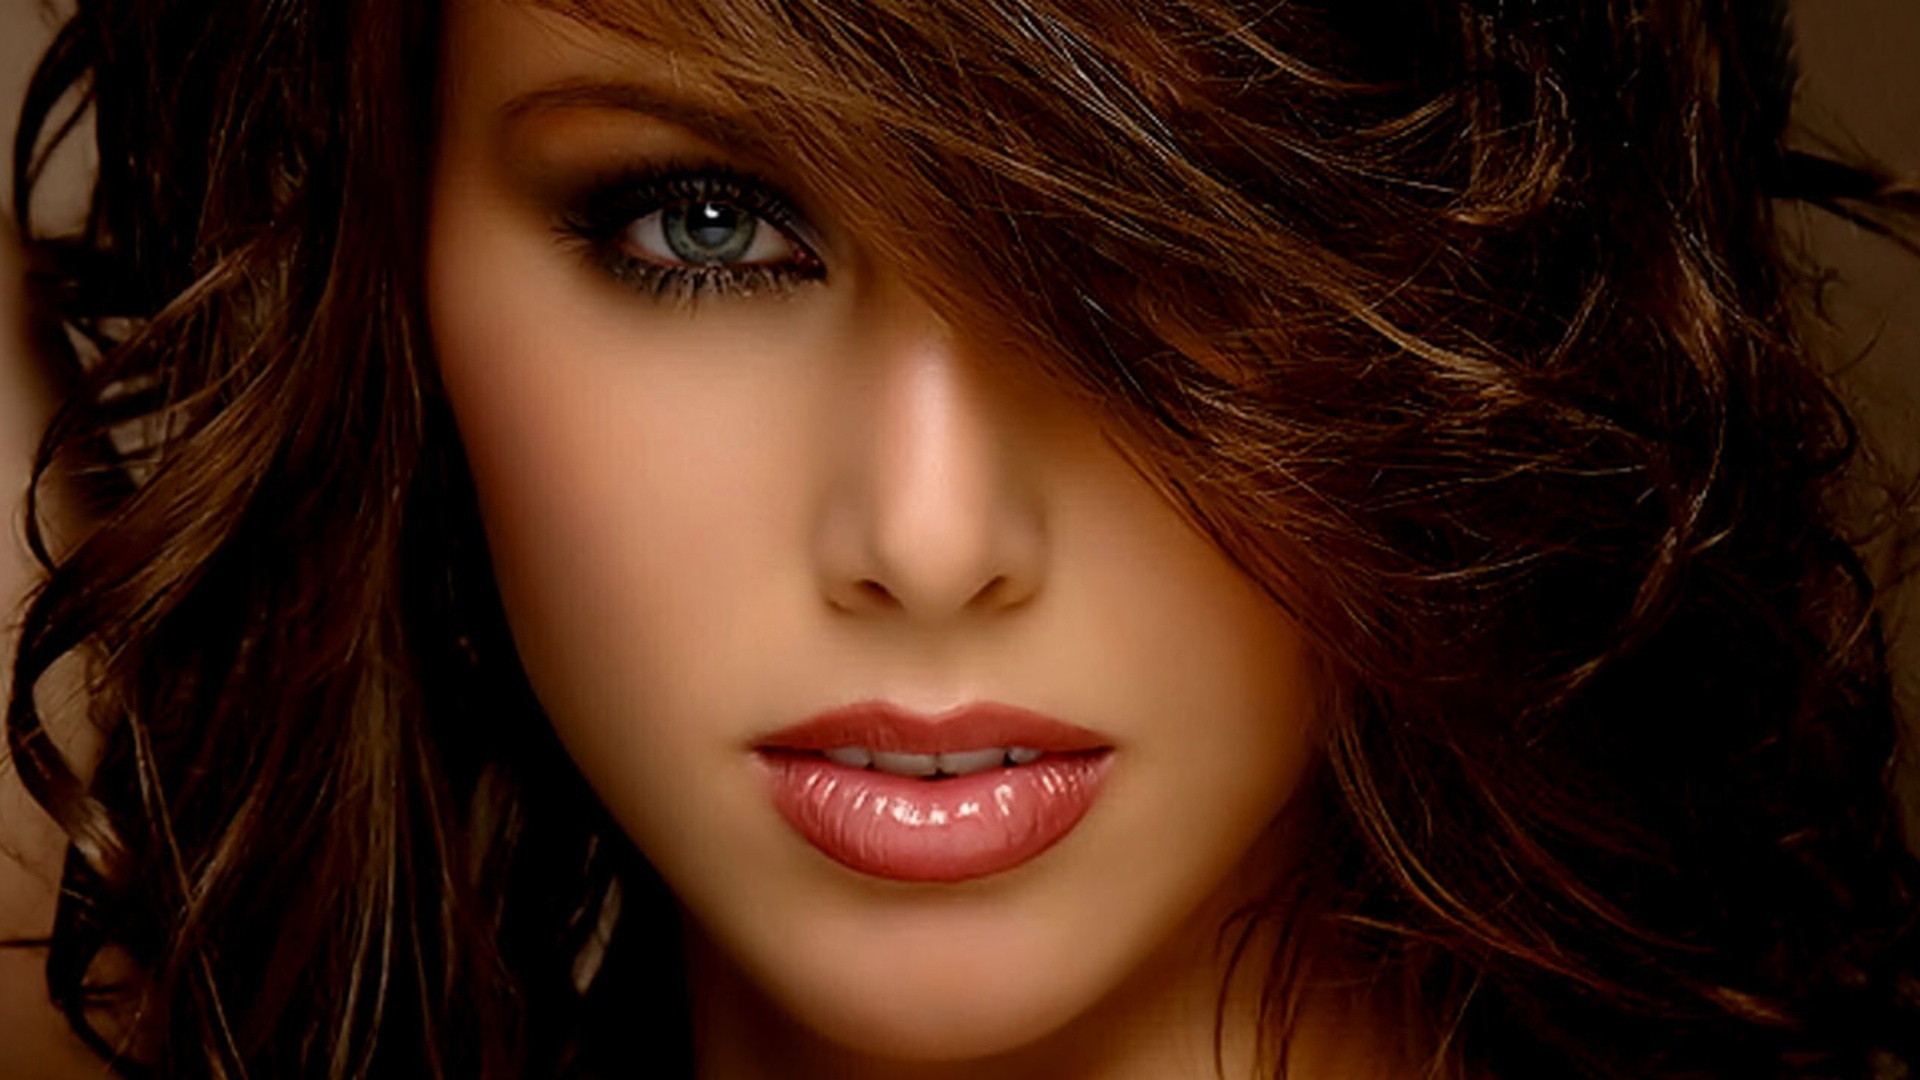 Download 1920x1080 wallpaper girl model, beautiful face 